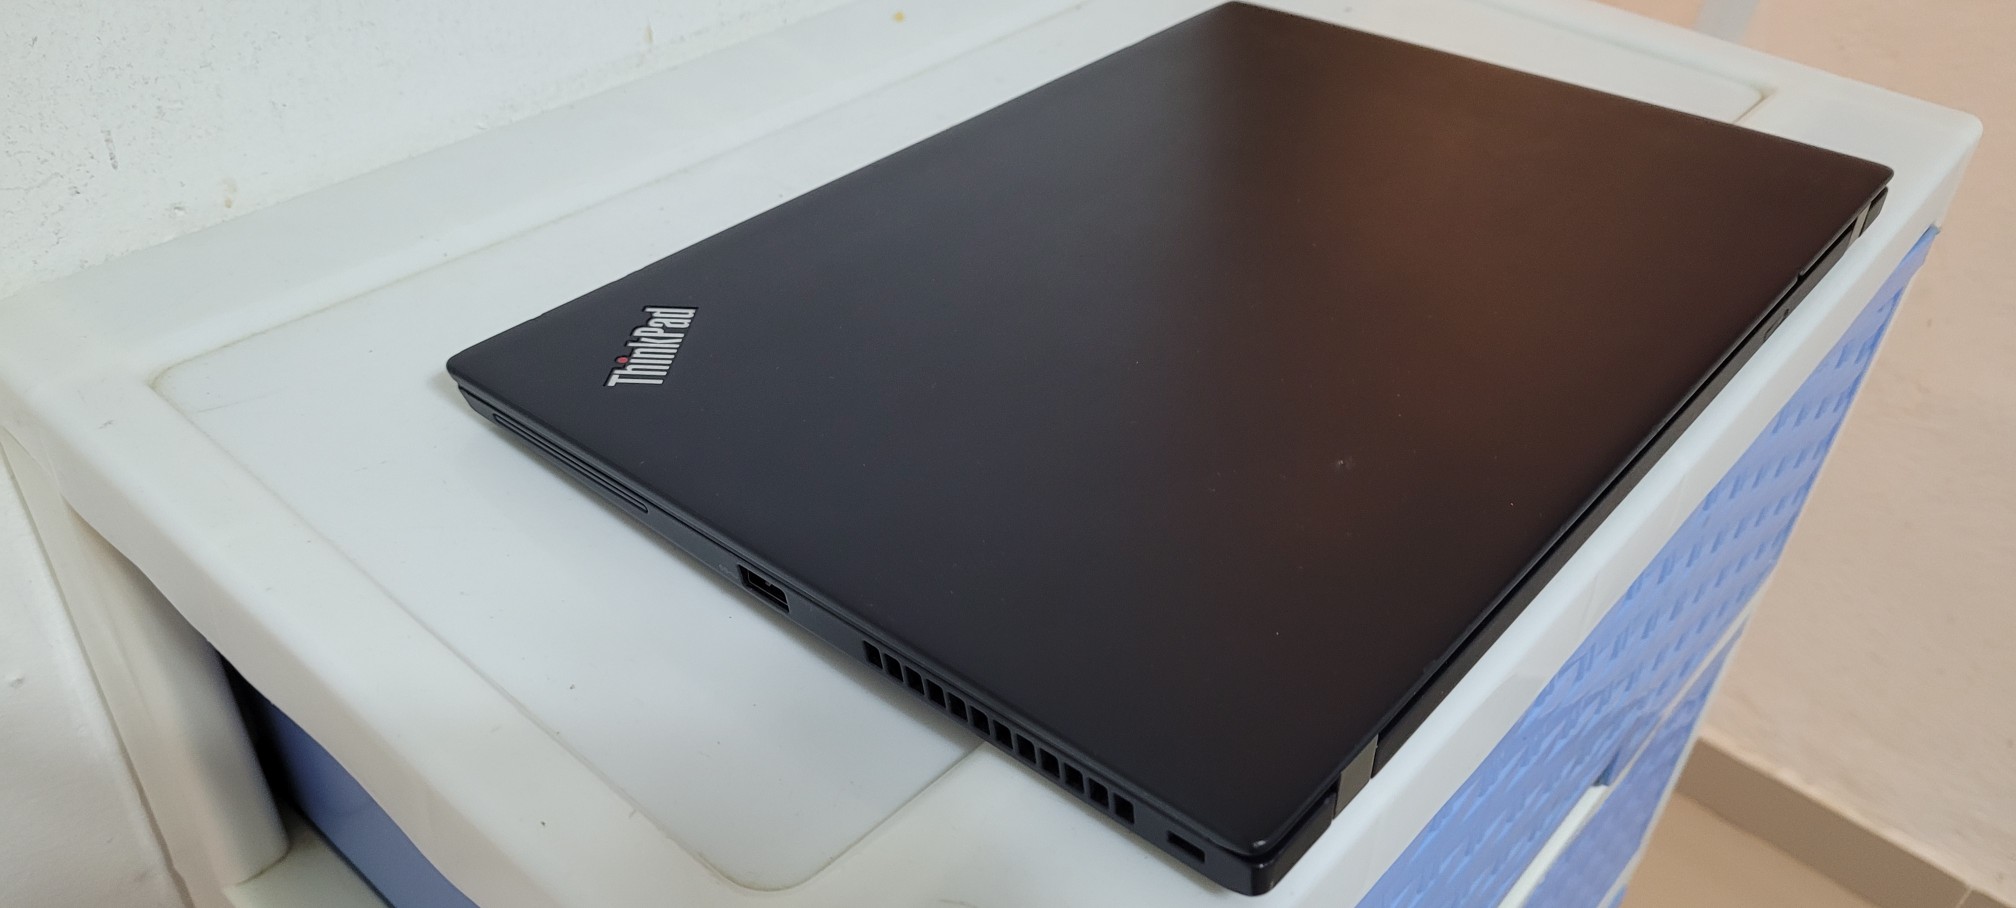 computadoras y laptops - Lenovo T480 14 Pulg Core i5 8va Gen Ram 8gb ddr4 Disco 256gb SSD Video 4gb 2